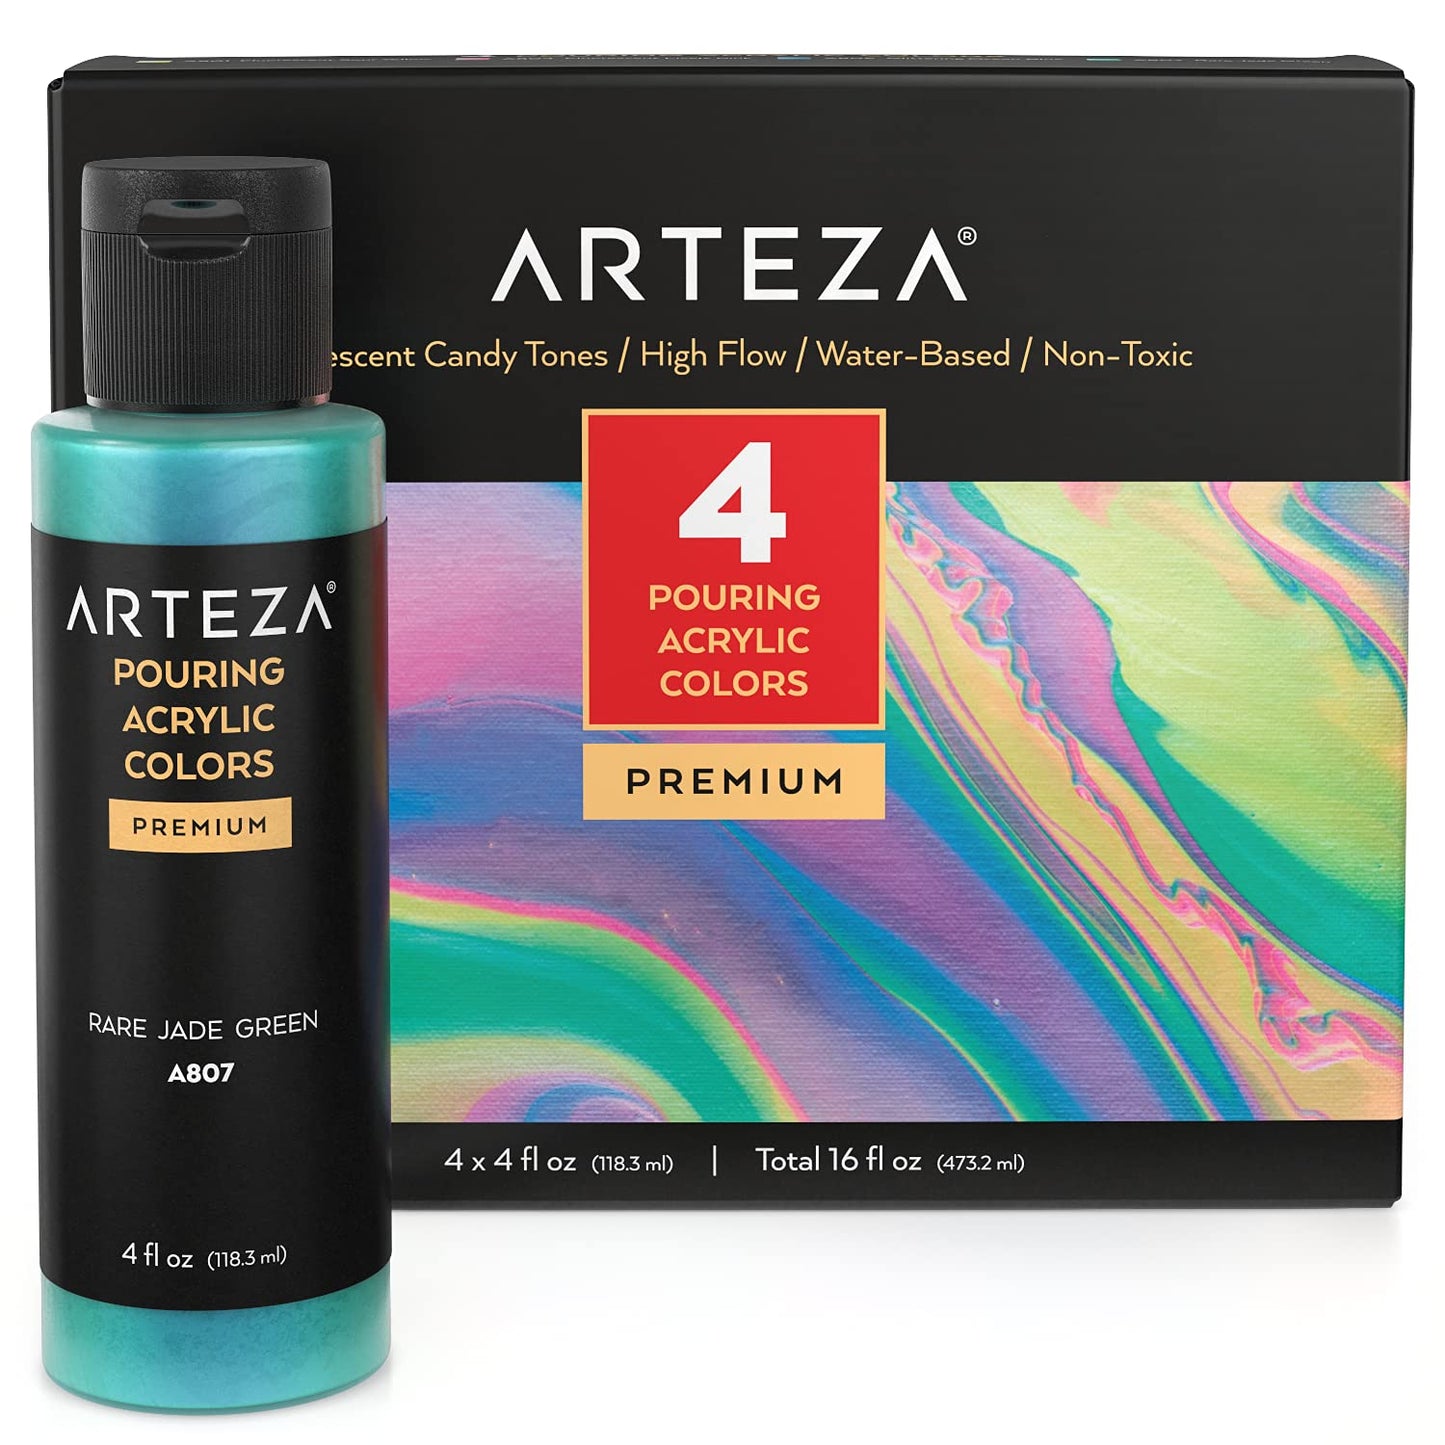 Arteza Pouring Acrylic Paint, Iridescent Candy Tones, 4oz Bottles - Set of 4